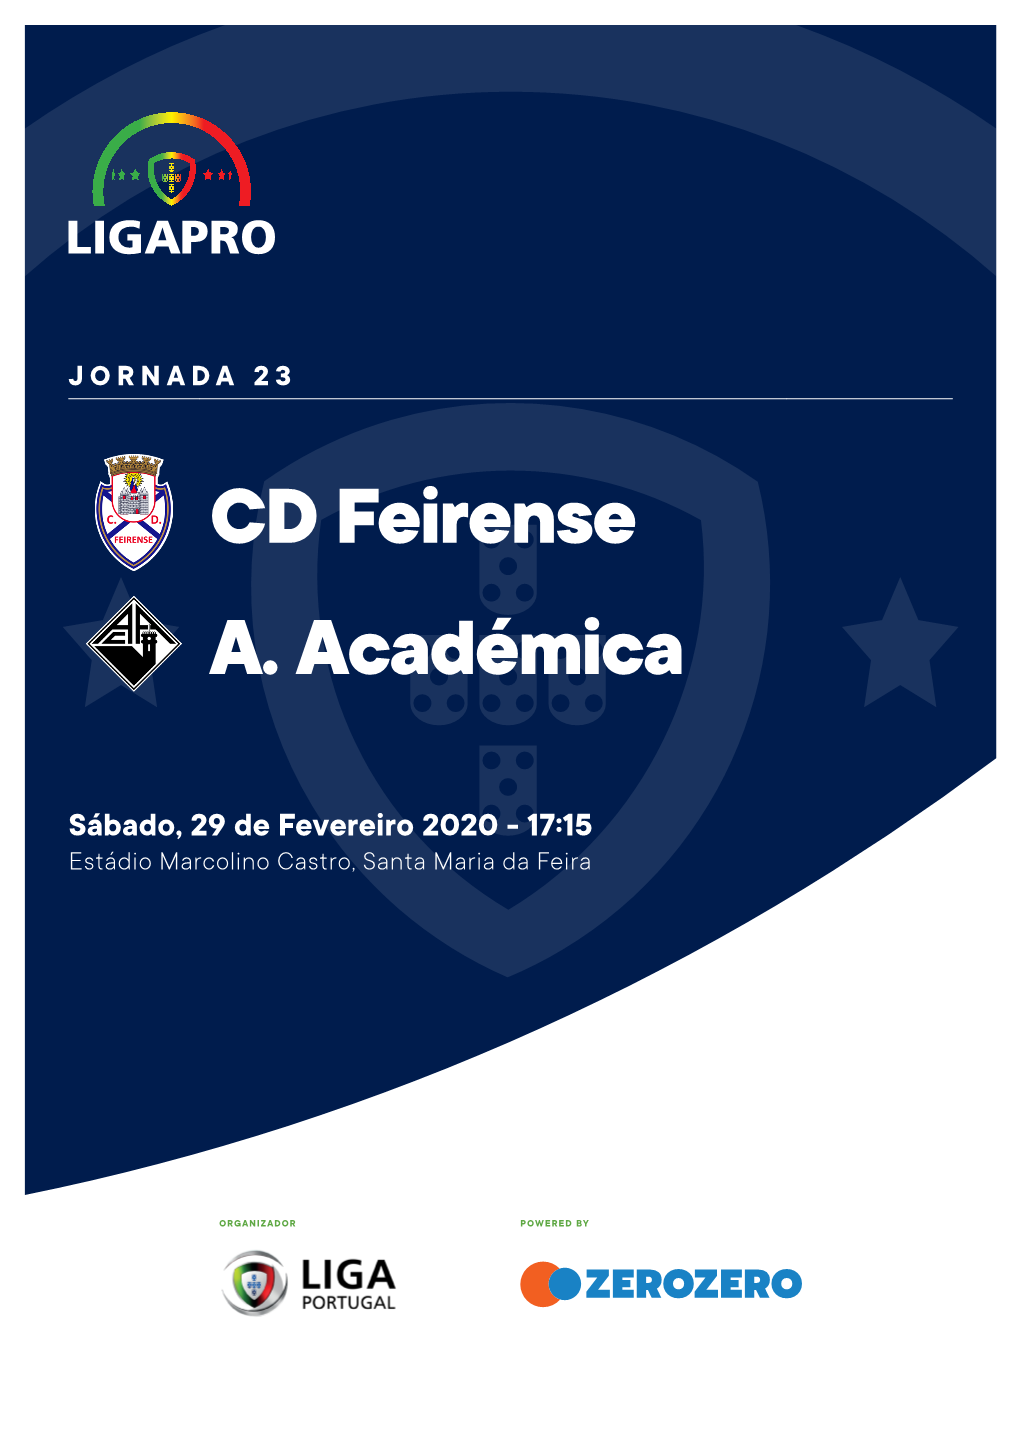 CD Feirense A. Académica